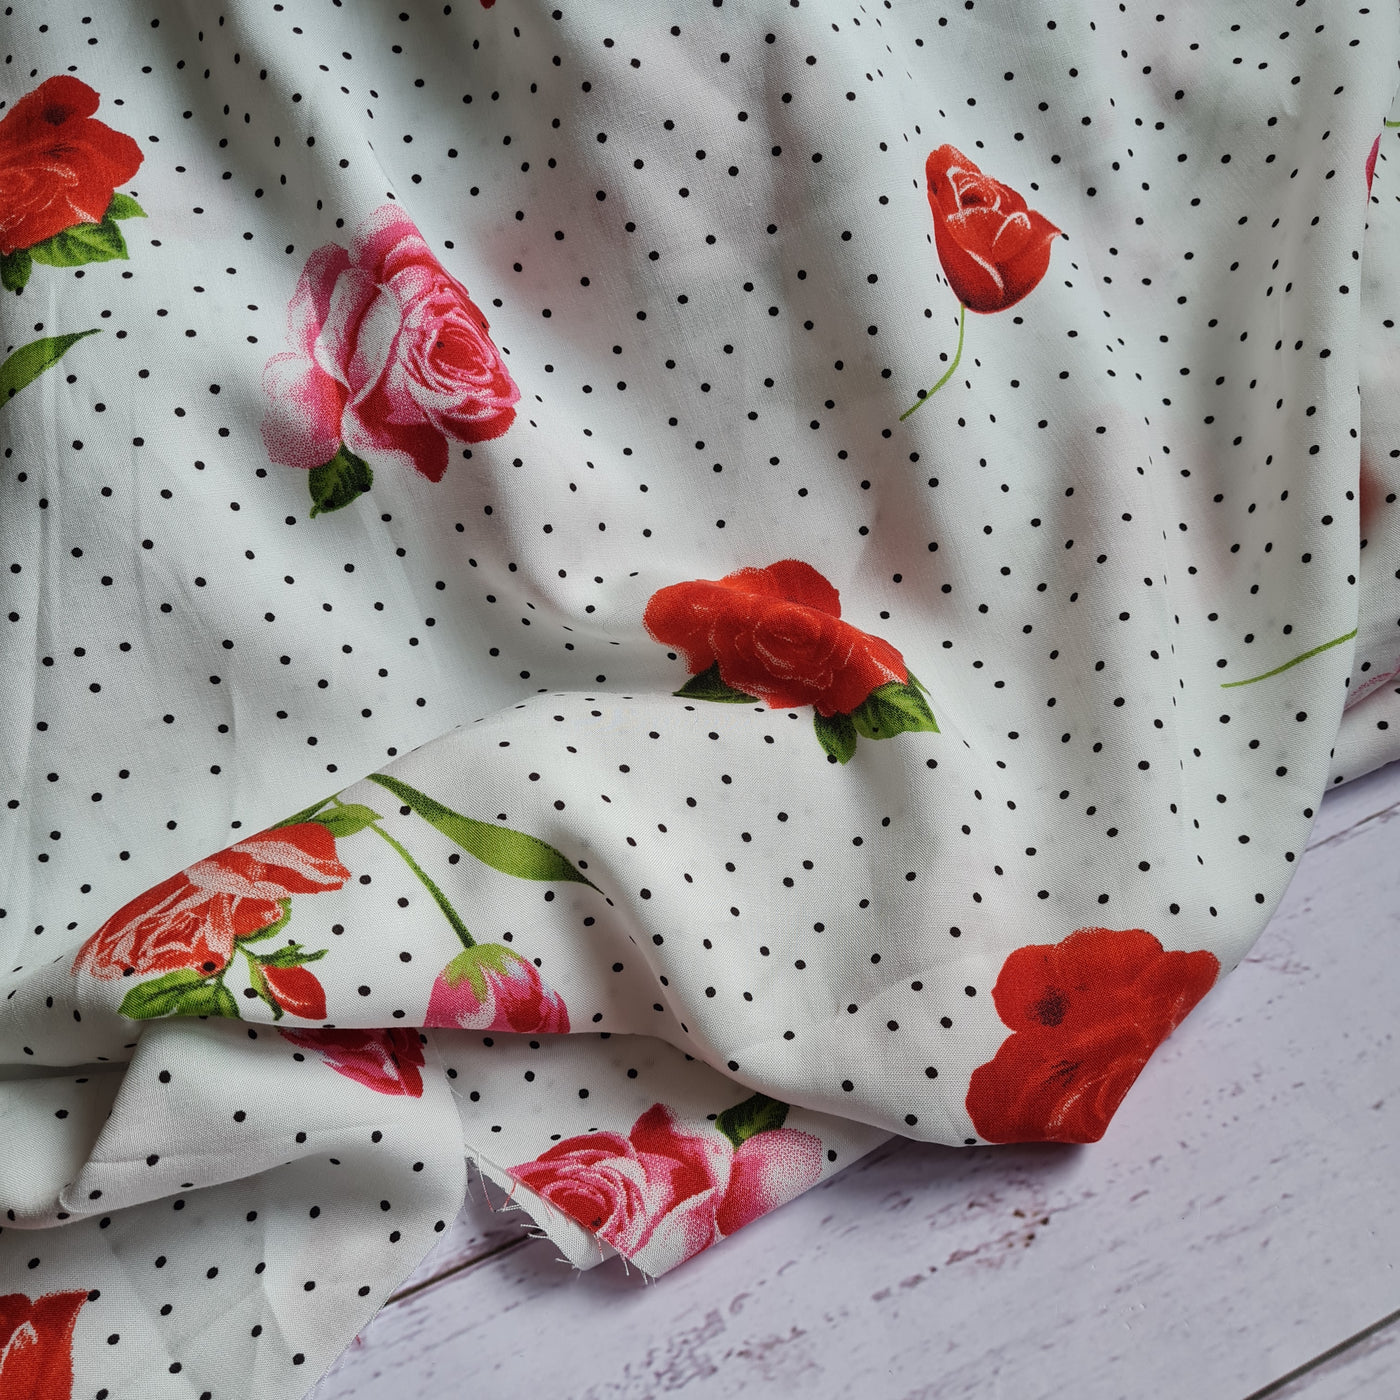 Vintage rose floral polka-dot viscose poplin fabric, by the half metre. White.